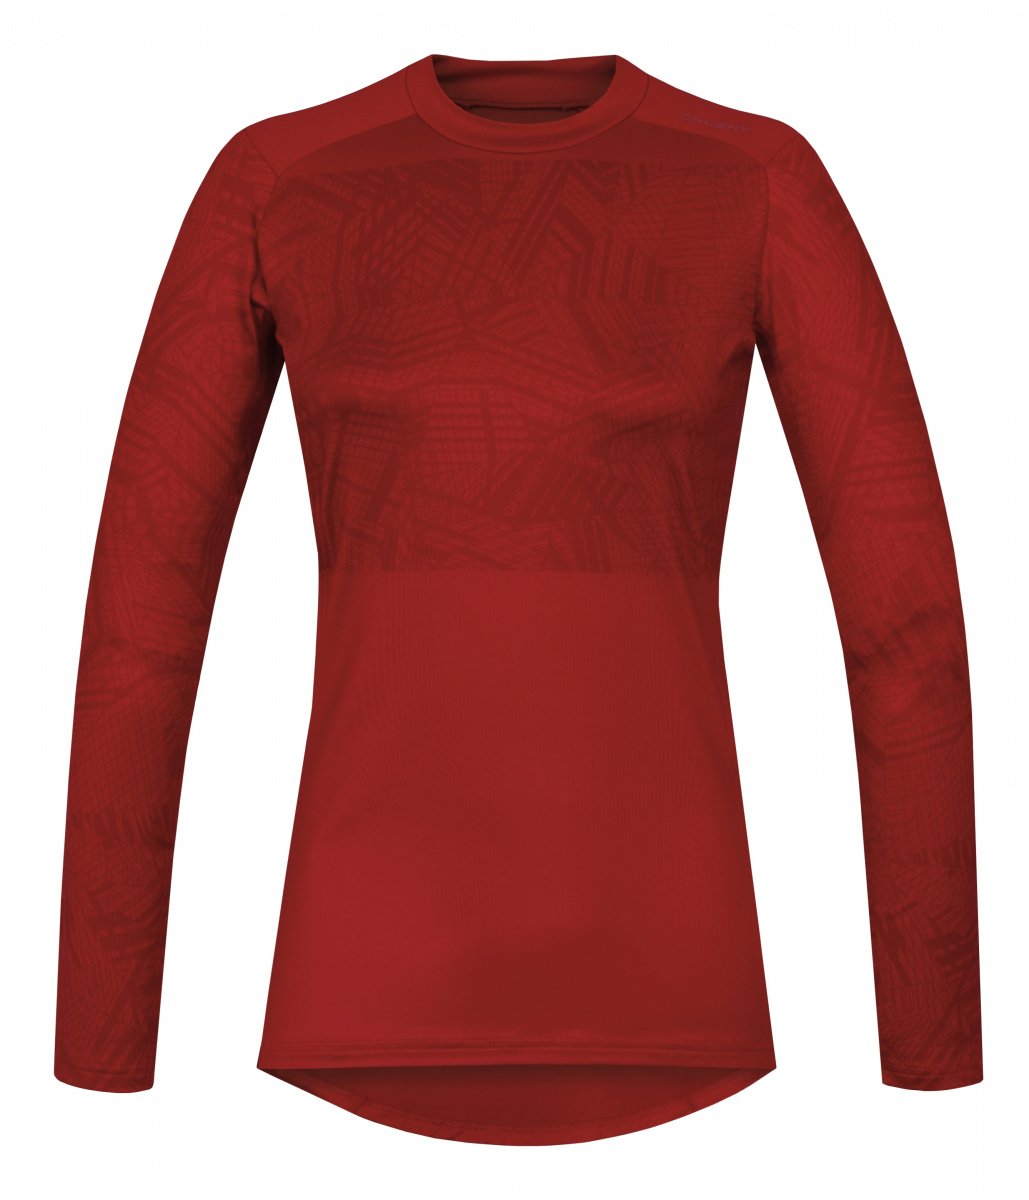 Active Winter thermal underwear - Women's long-sleeve T-shirt